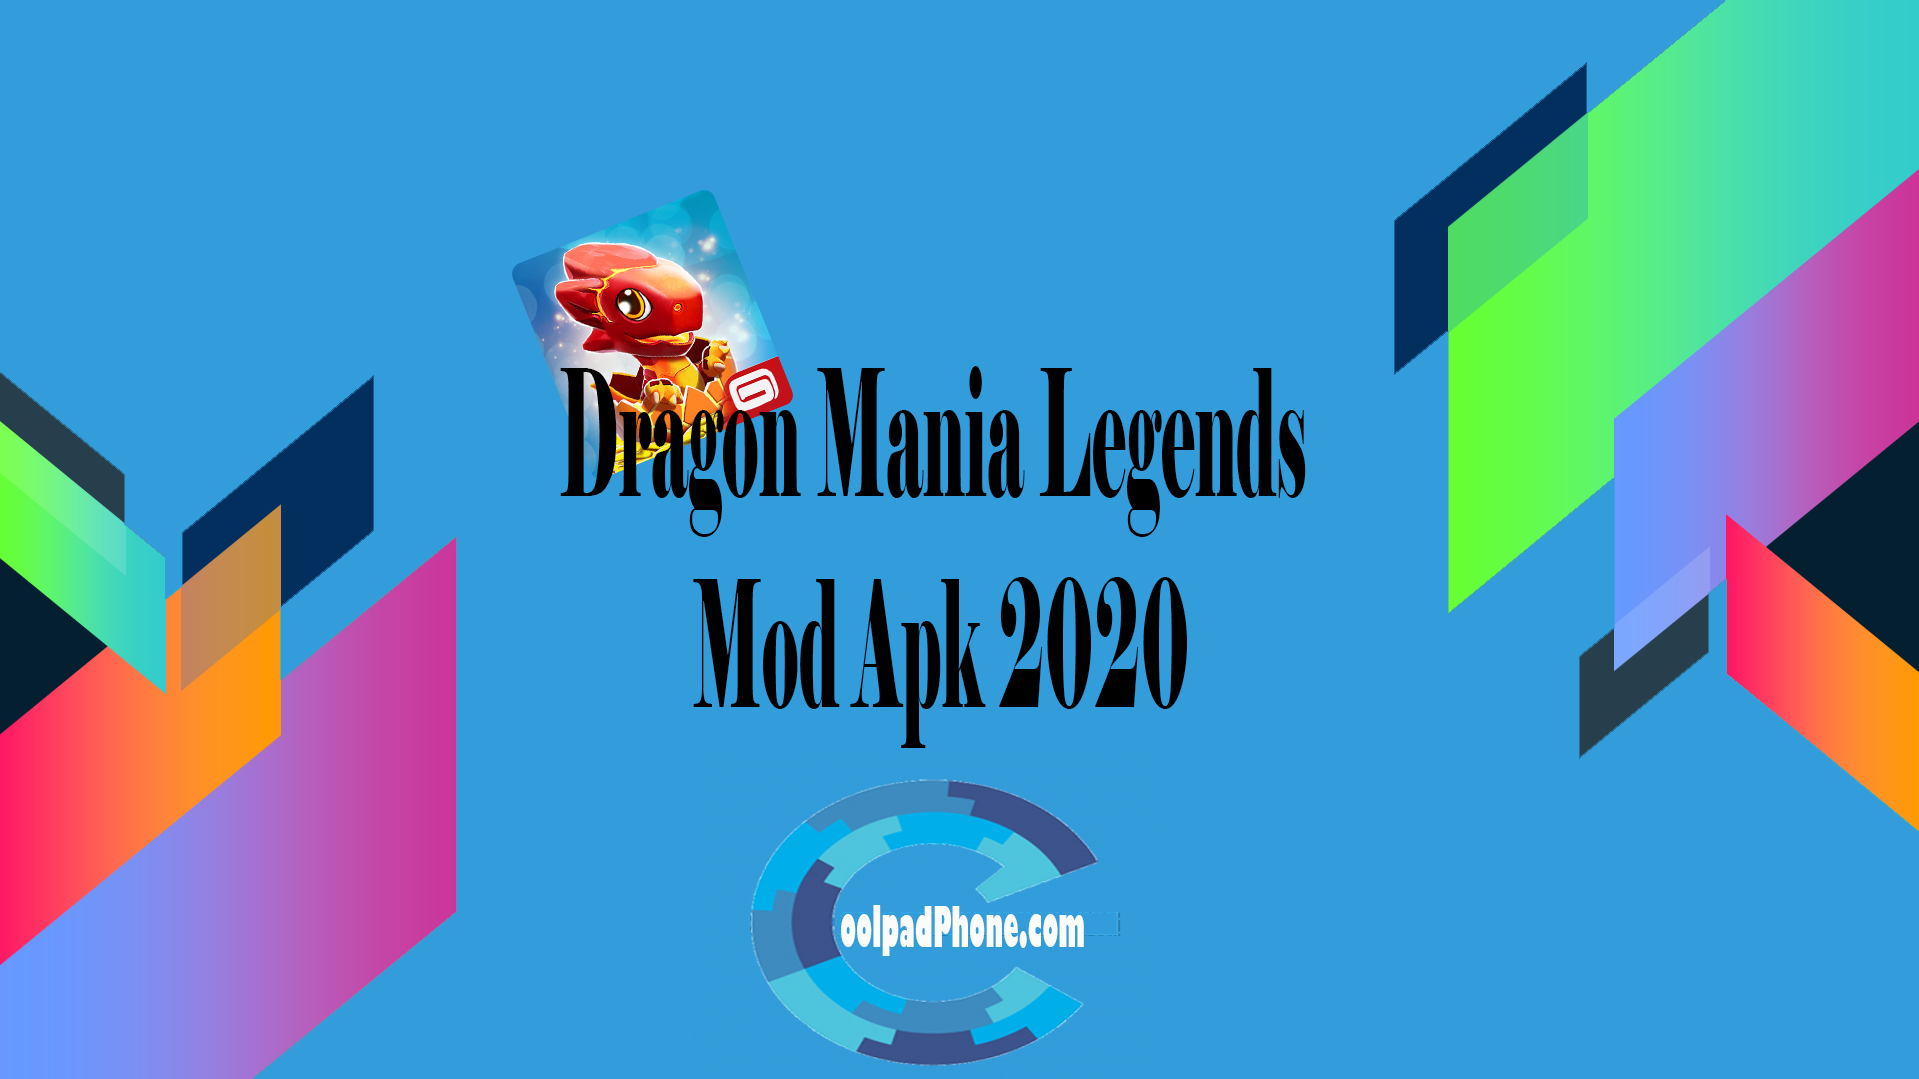 2018 dragon mania legends mod apk unlimited everything